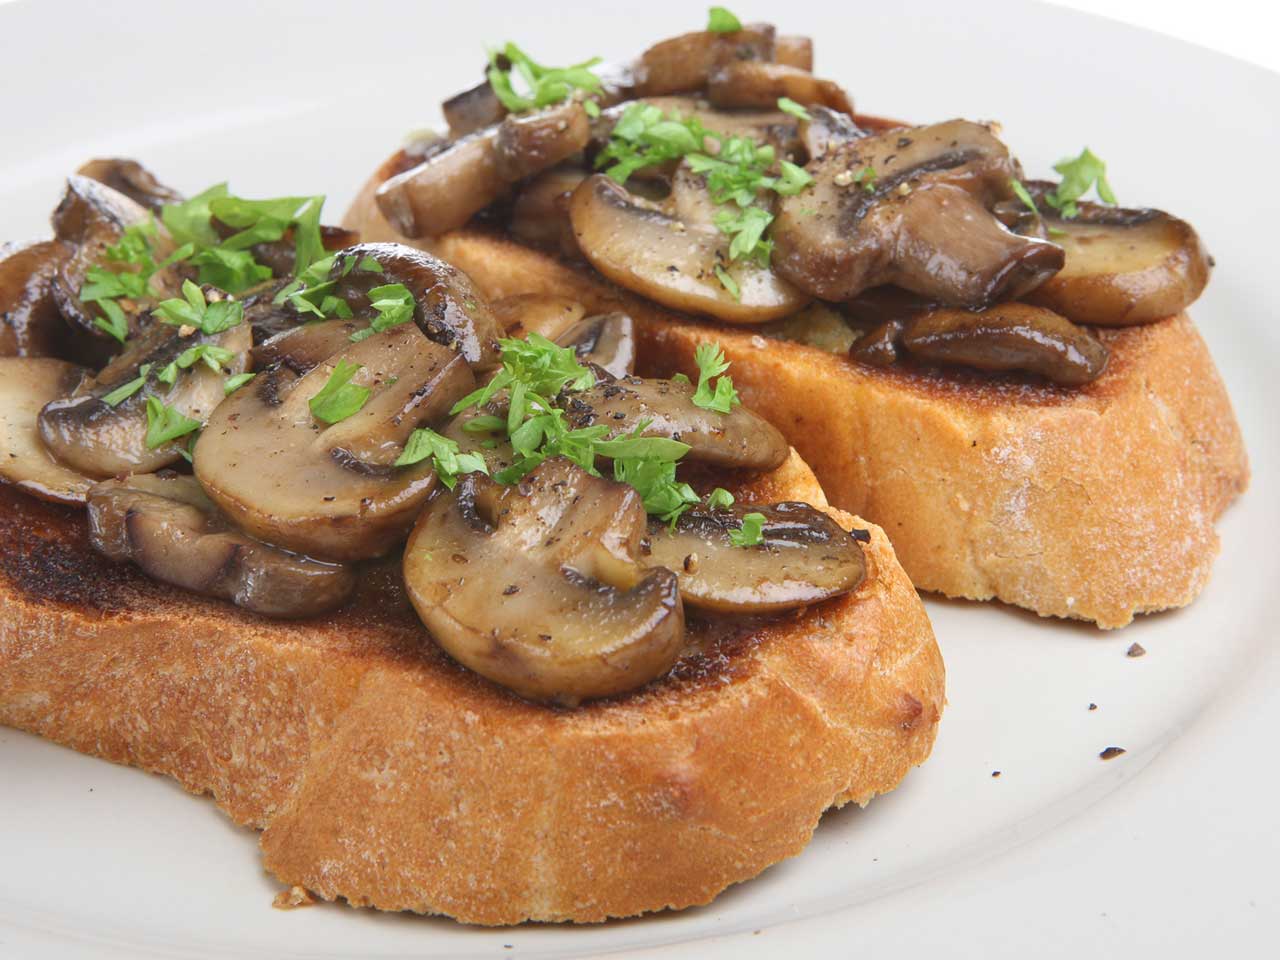 Creamy garlic mushrooms on toast